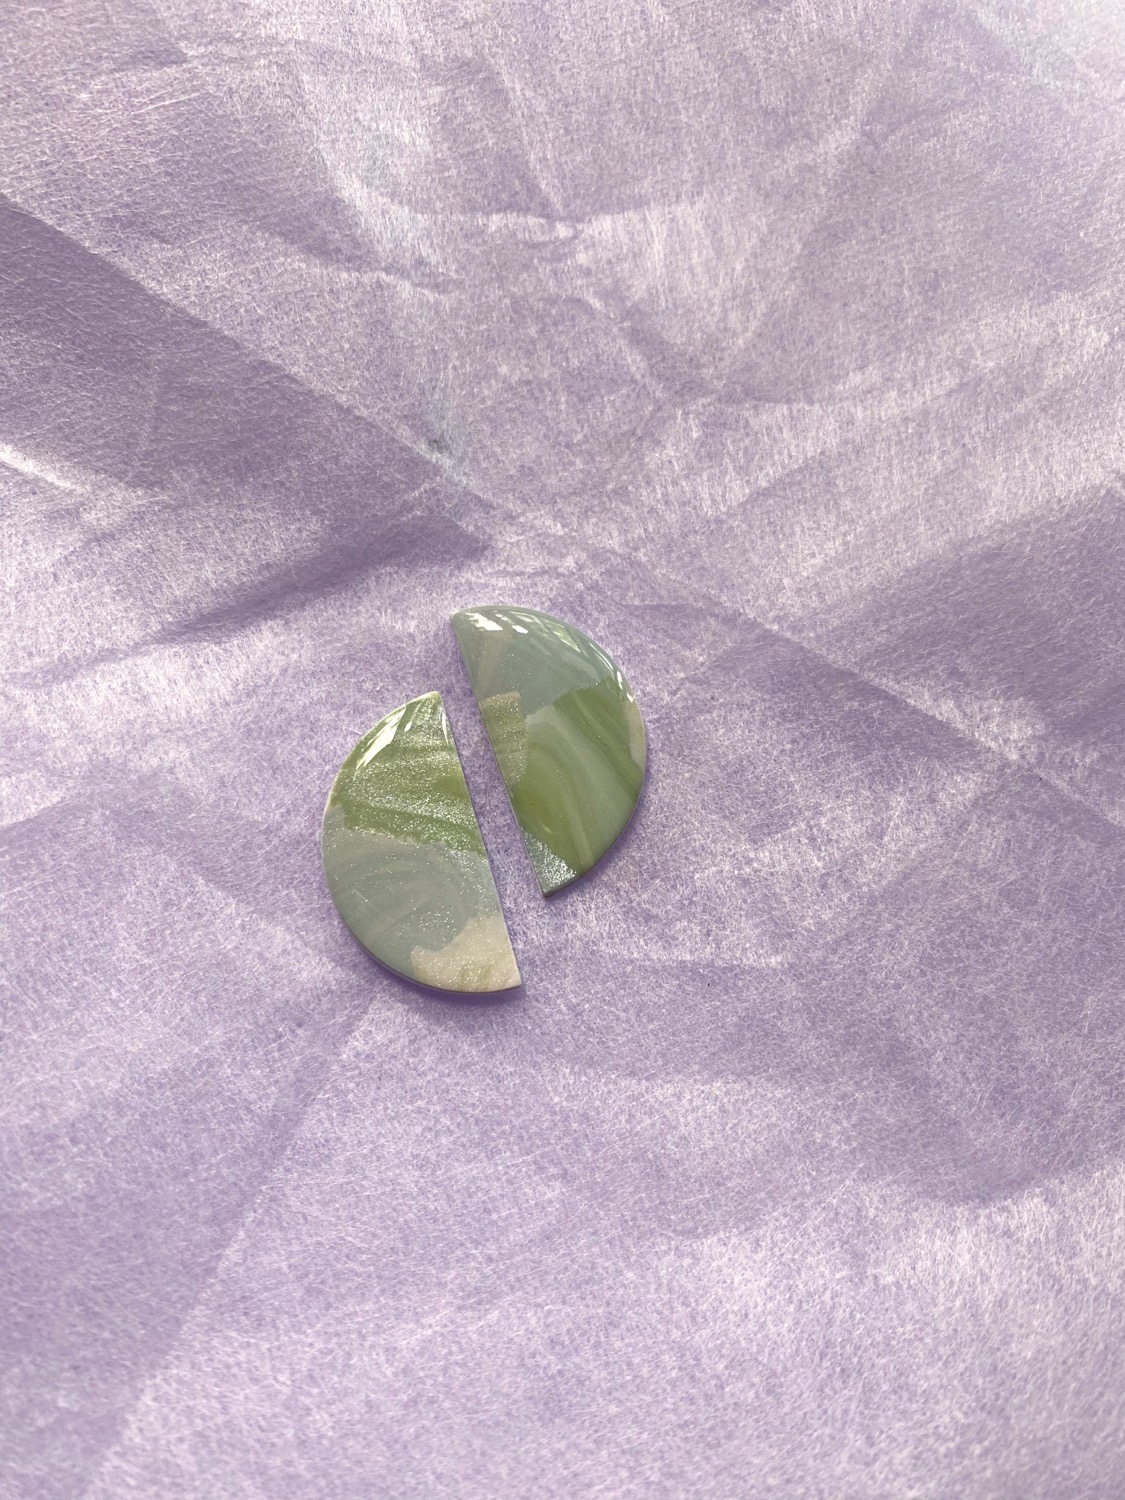 Coated Marble (jade Marble) - Half Moon Studs, Polymer Clay Earrings